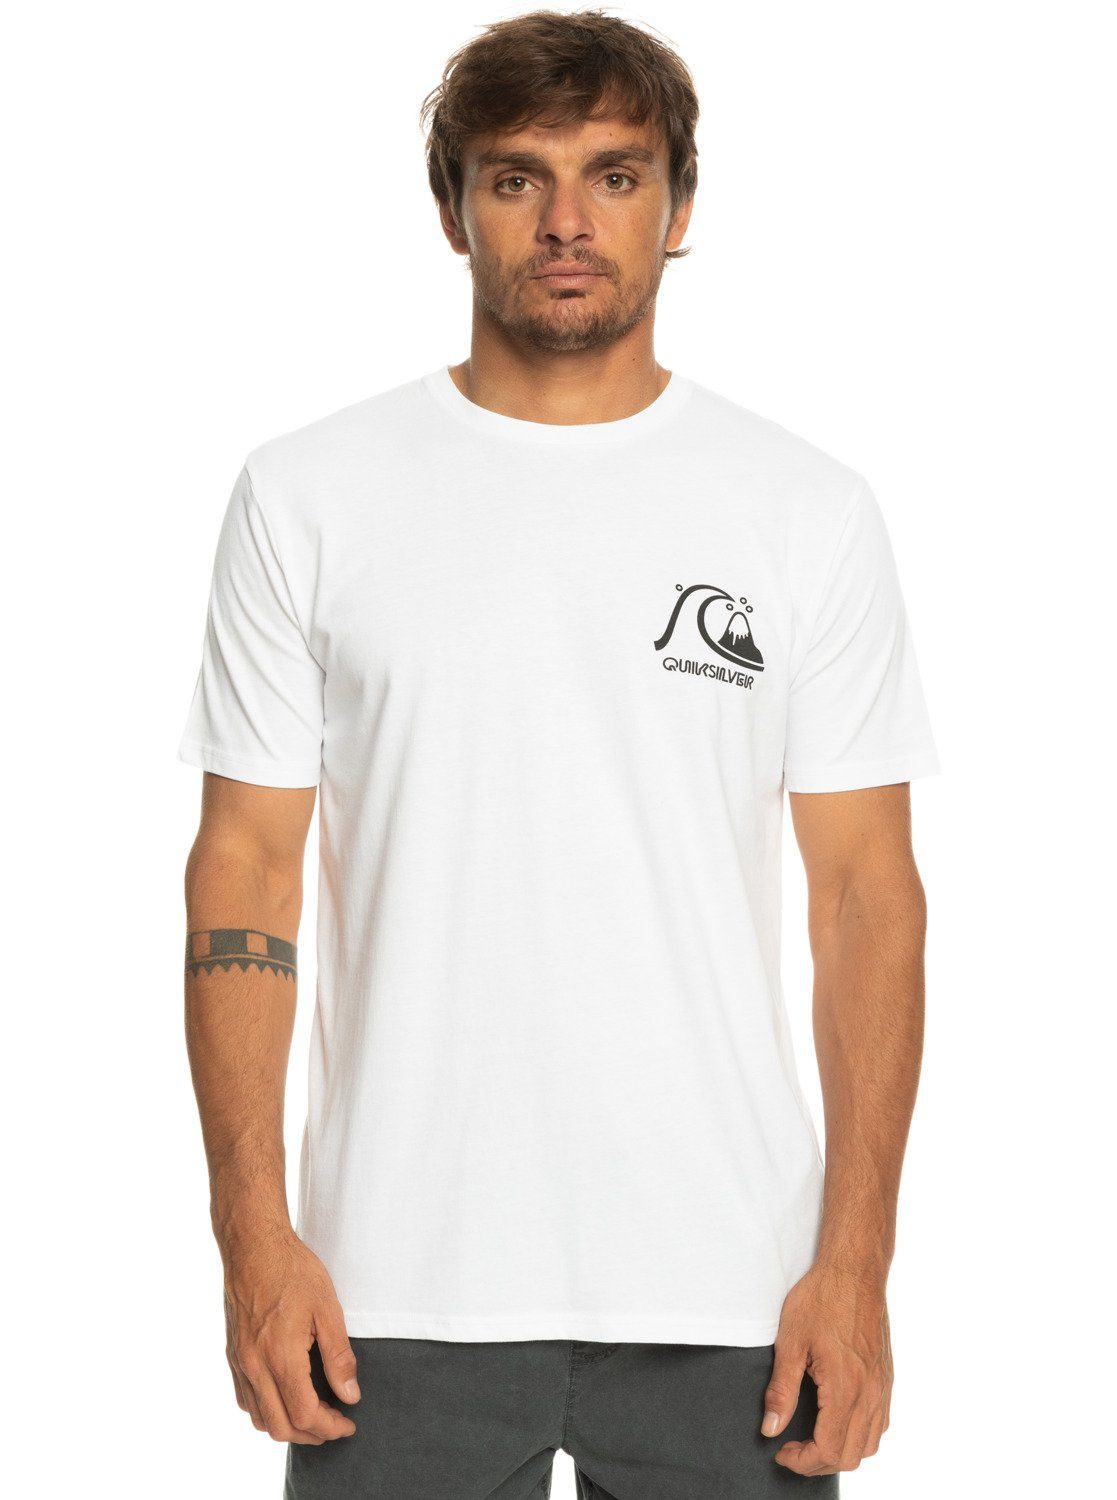 Quiksilver T-Shirt The Original White